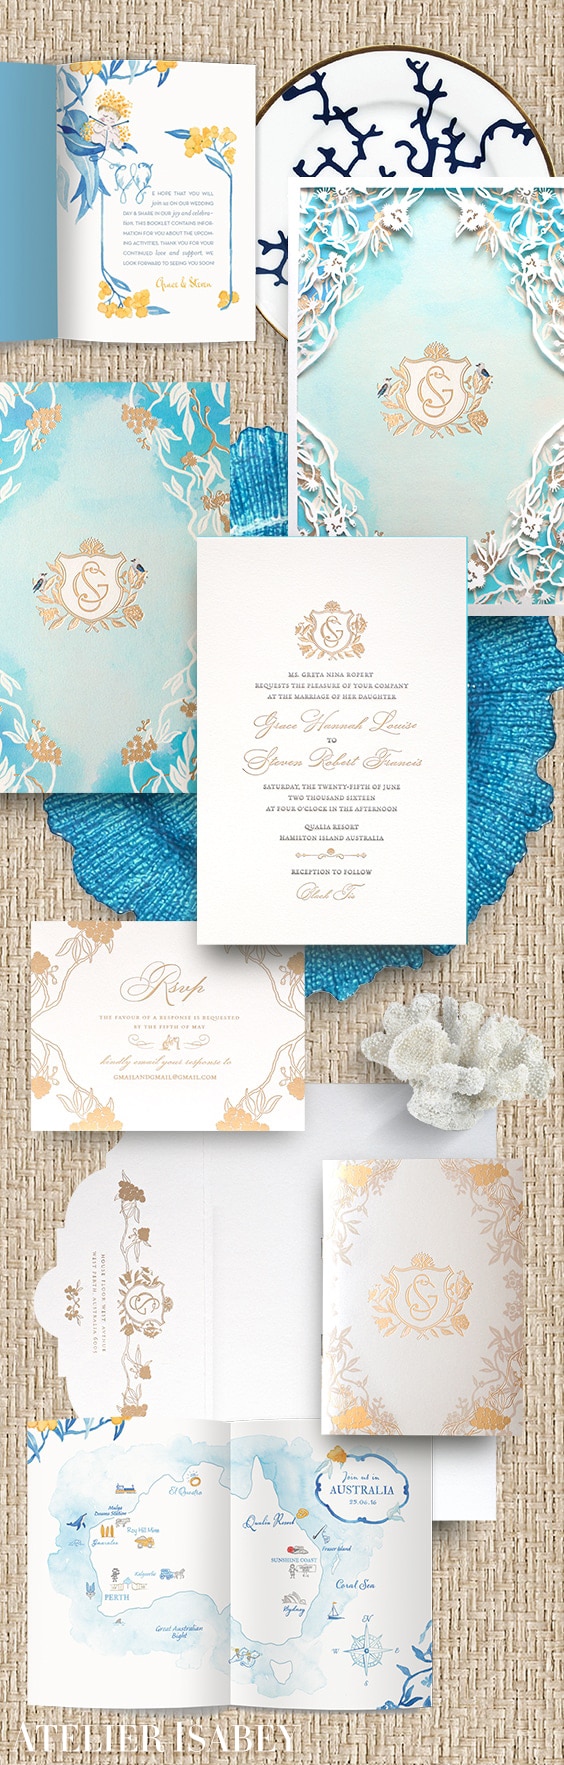 Laser cut and watercolor wedding invitation